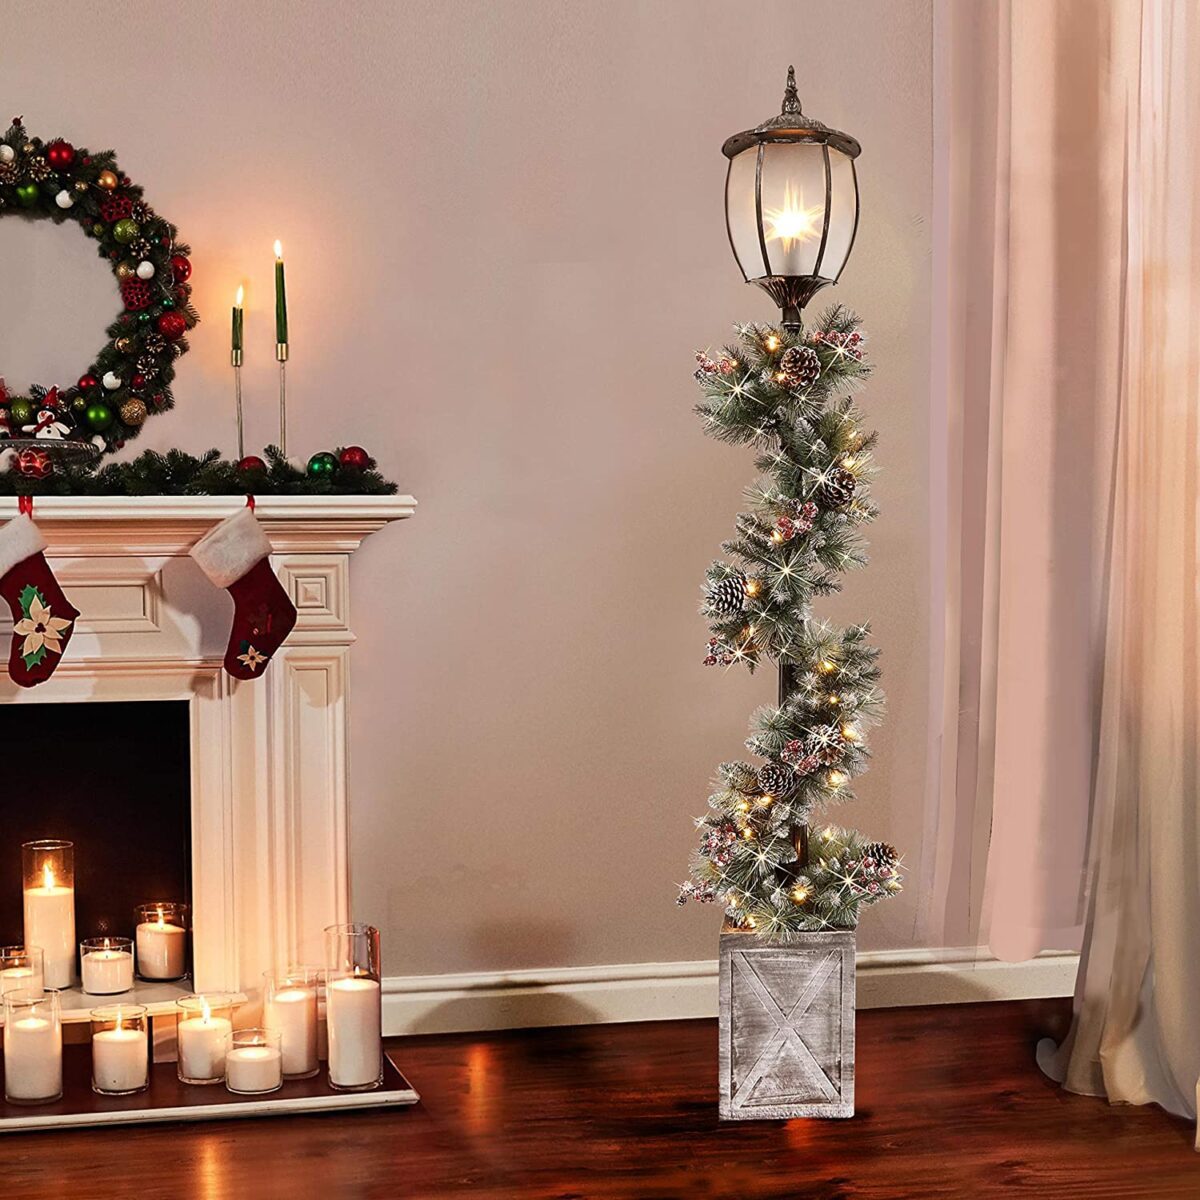 19 Cozy, Comfy Christmas Pj’s & Christmas Decor Ideas For Celebrating The Season At Home